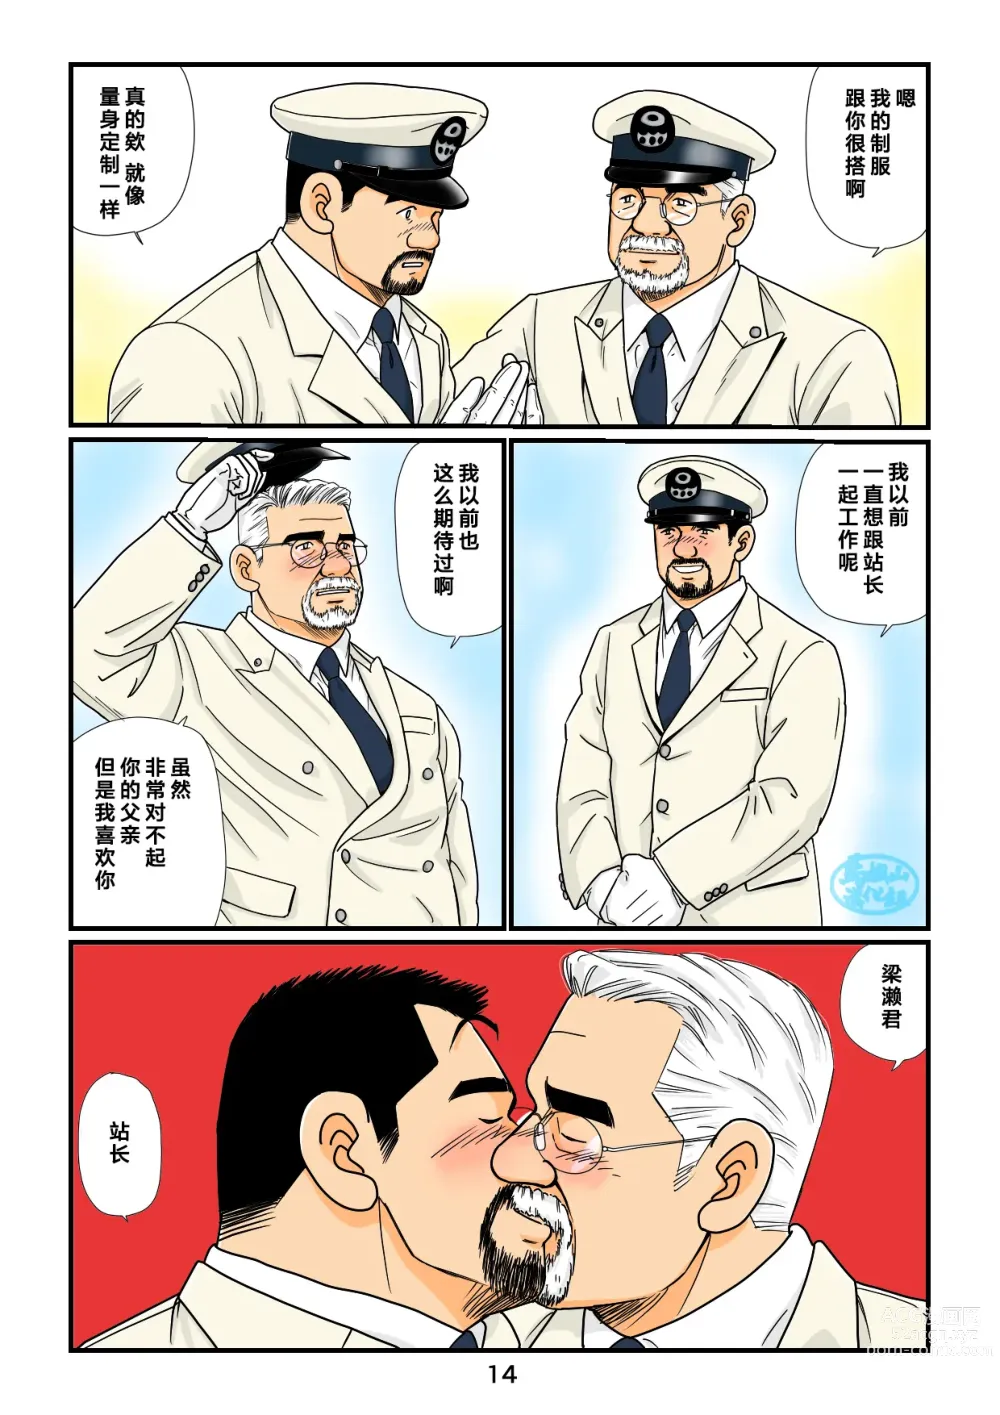 Page 14 of manga 「铁道员的浪漫」 第三回 站长与铁道员之夜